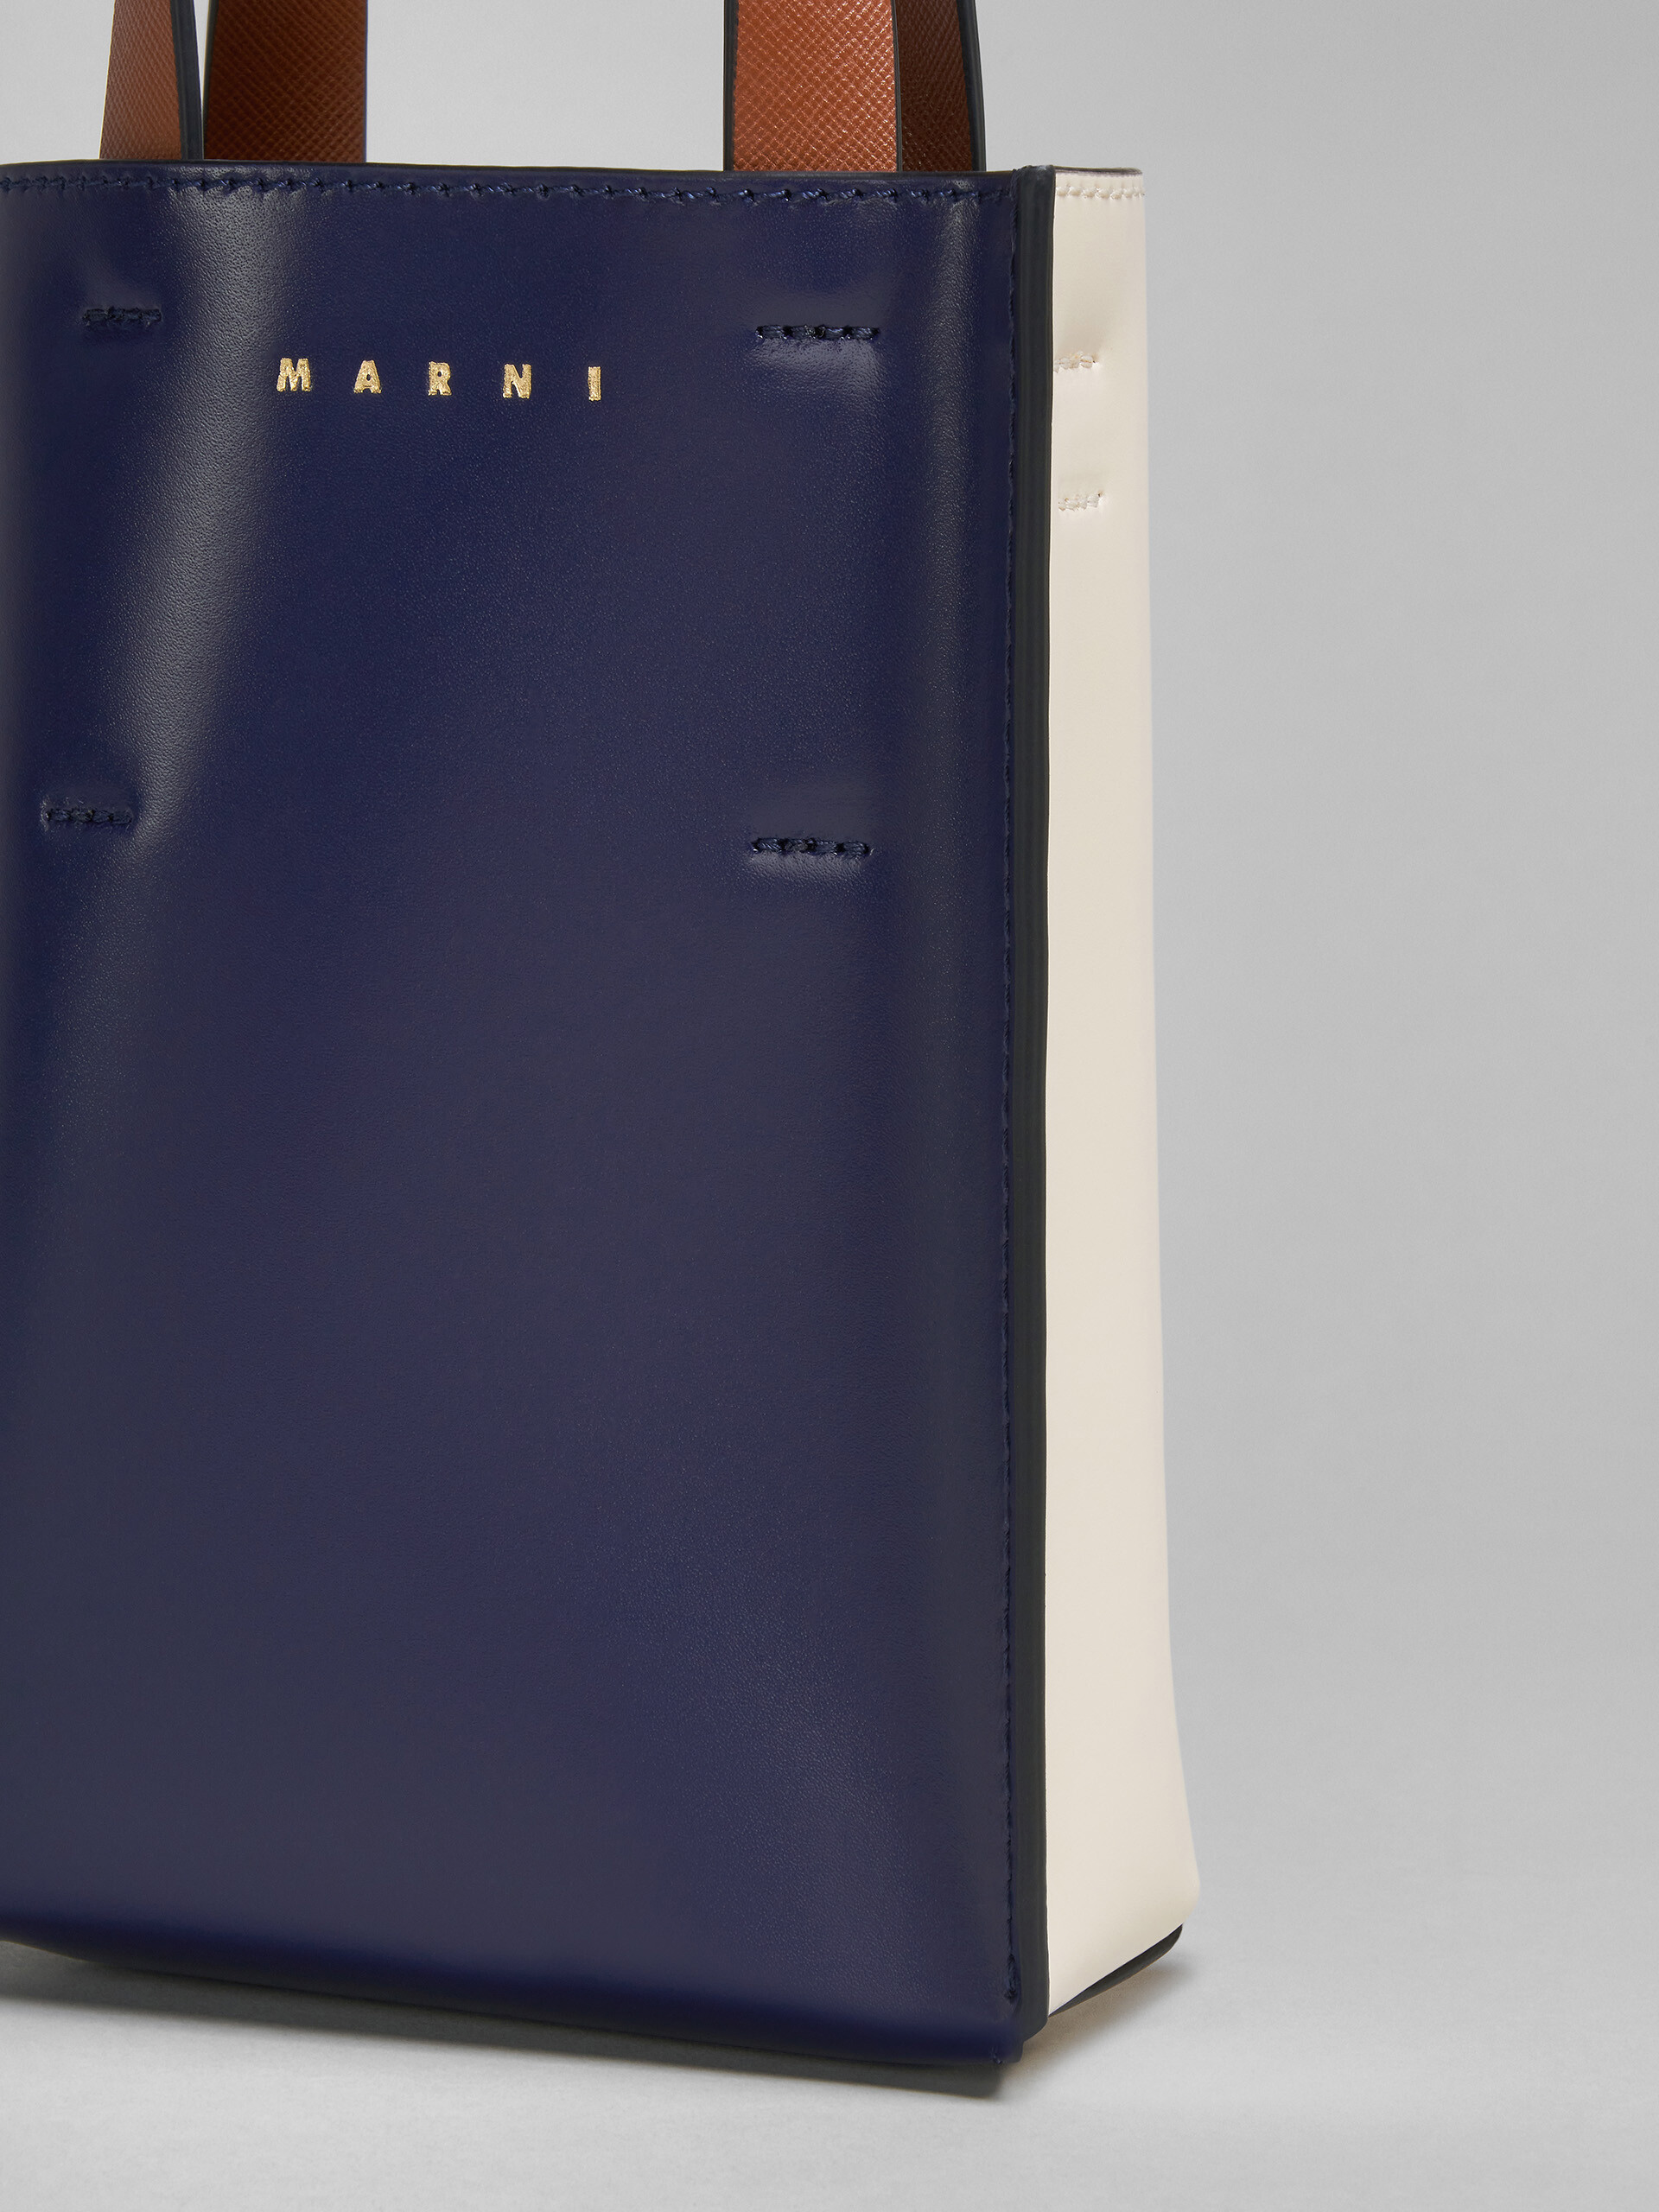 Sac nano MUSEO en cuir bleu et blanc - Sacs cabas - Image 5